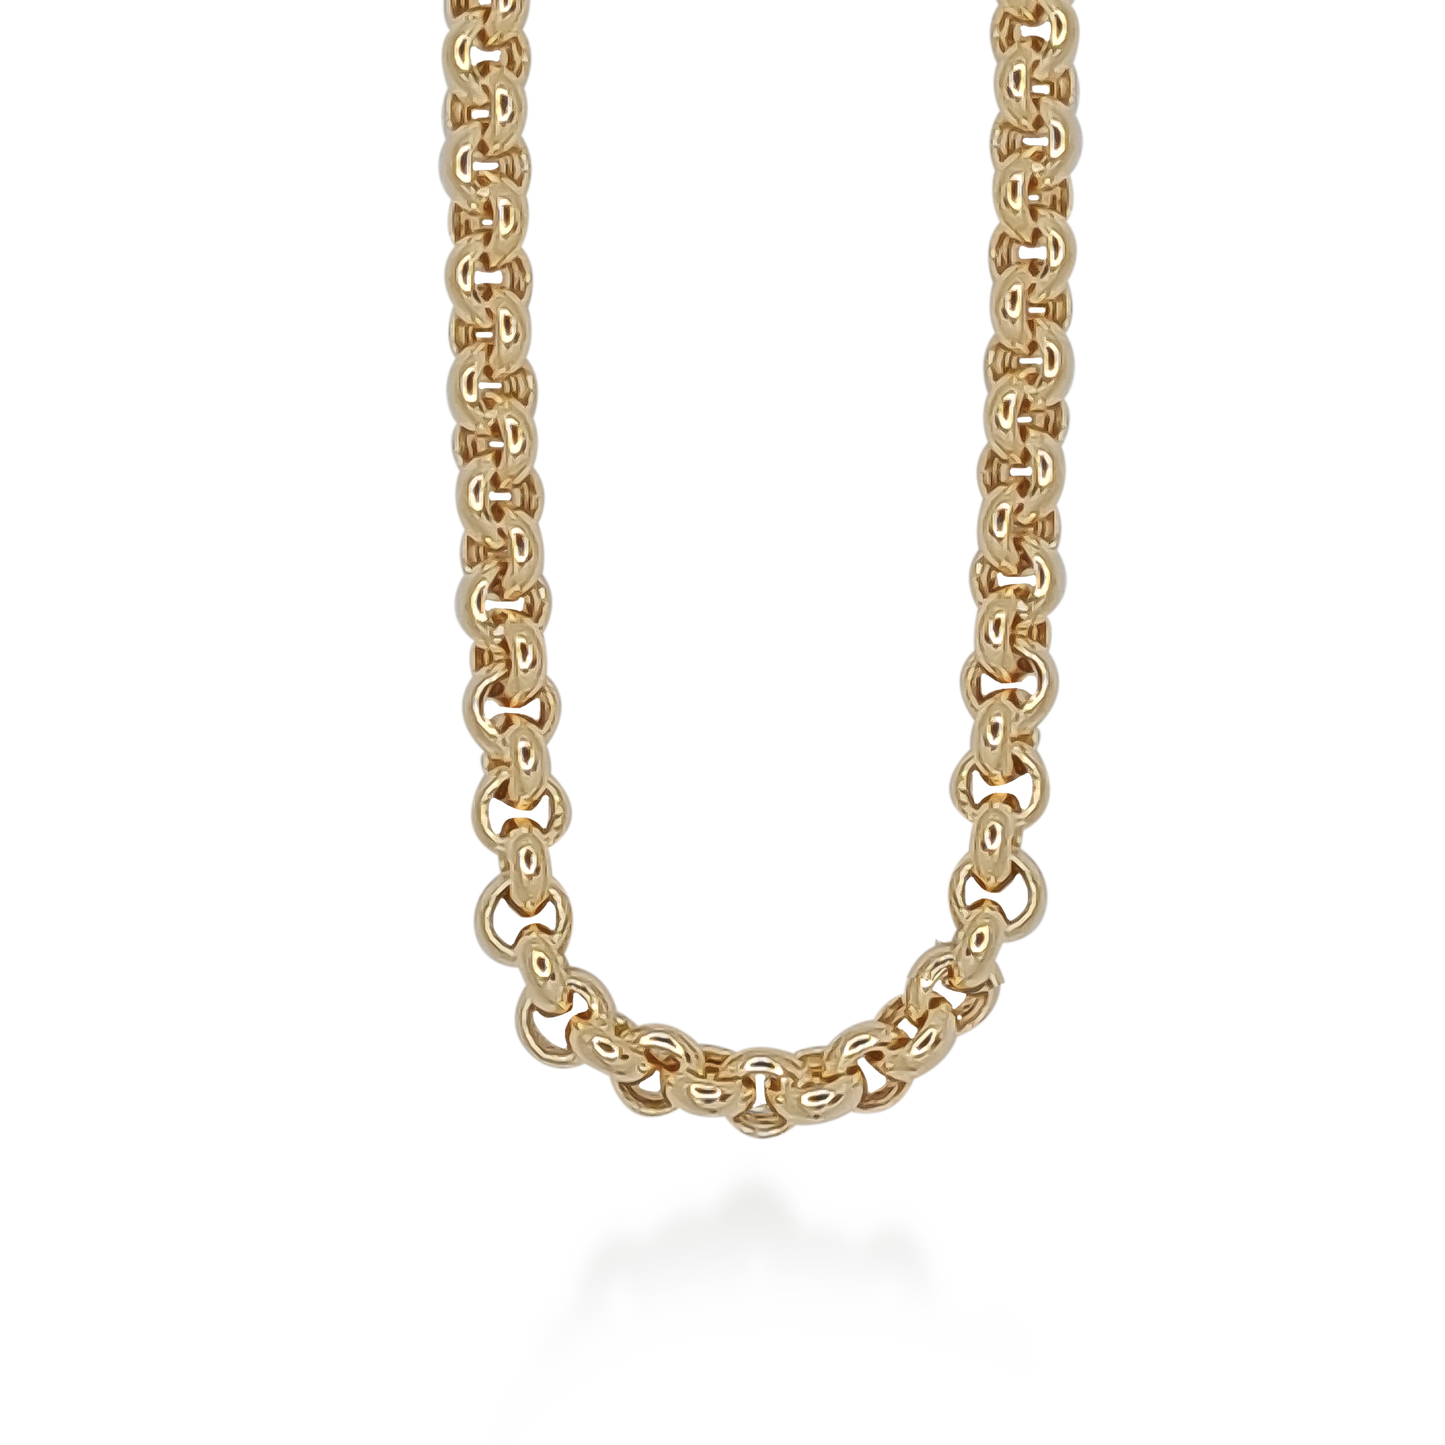 Belcher Link Necklace & Bracelet set in 9ct Yellow Gold